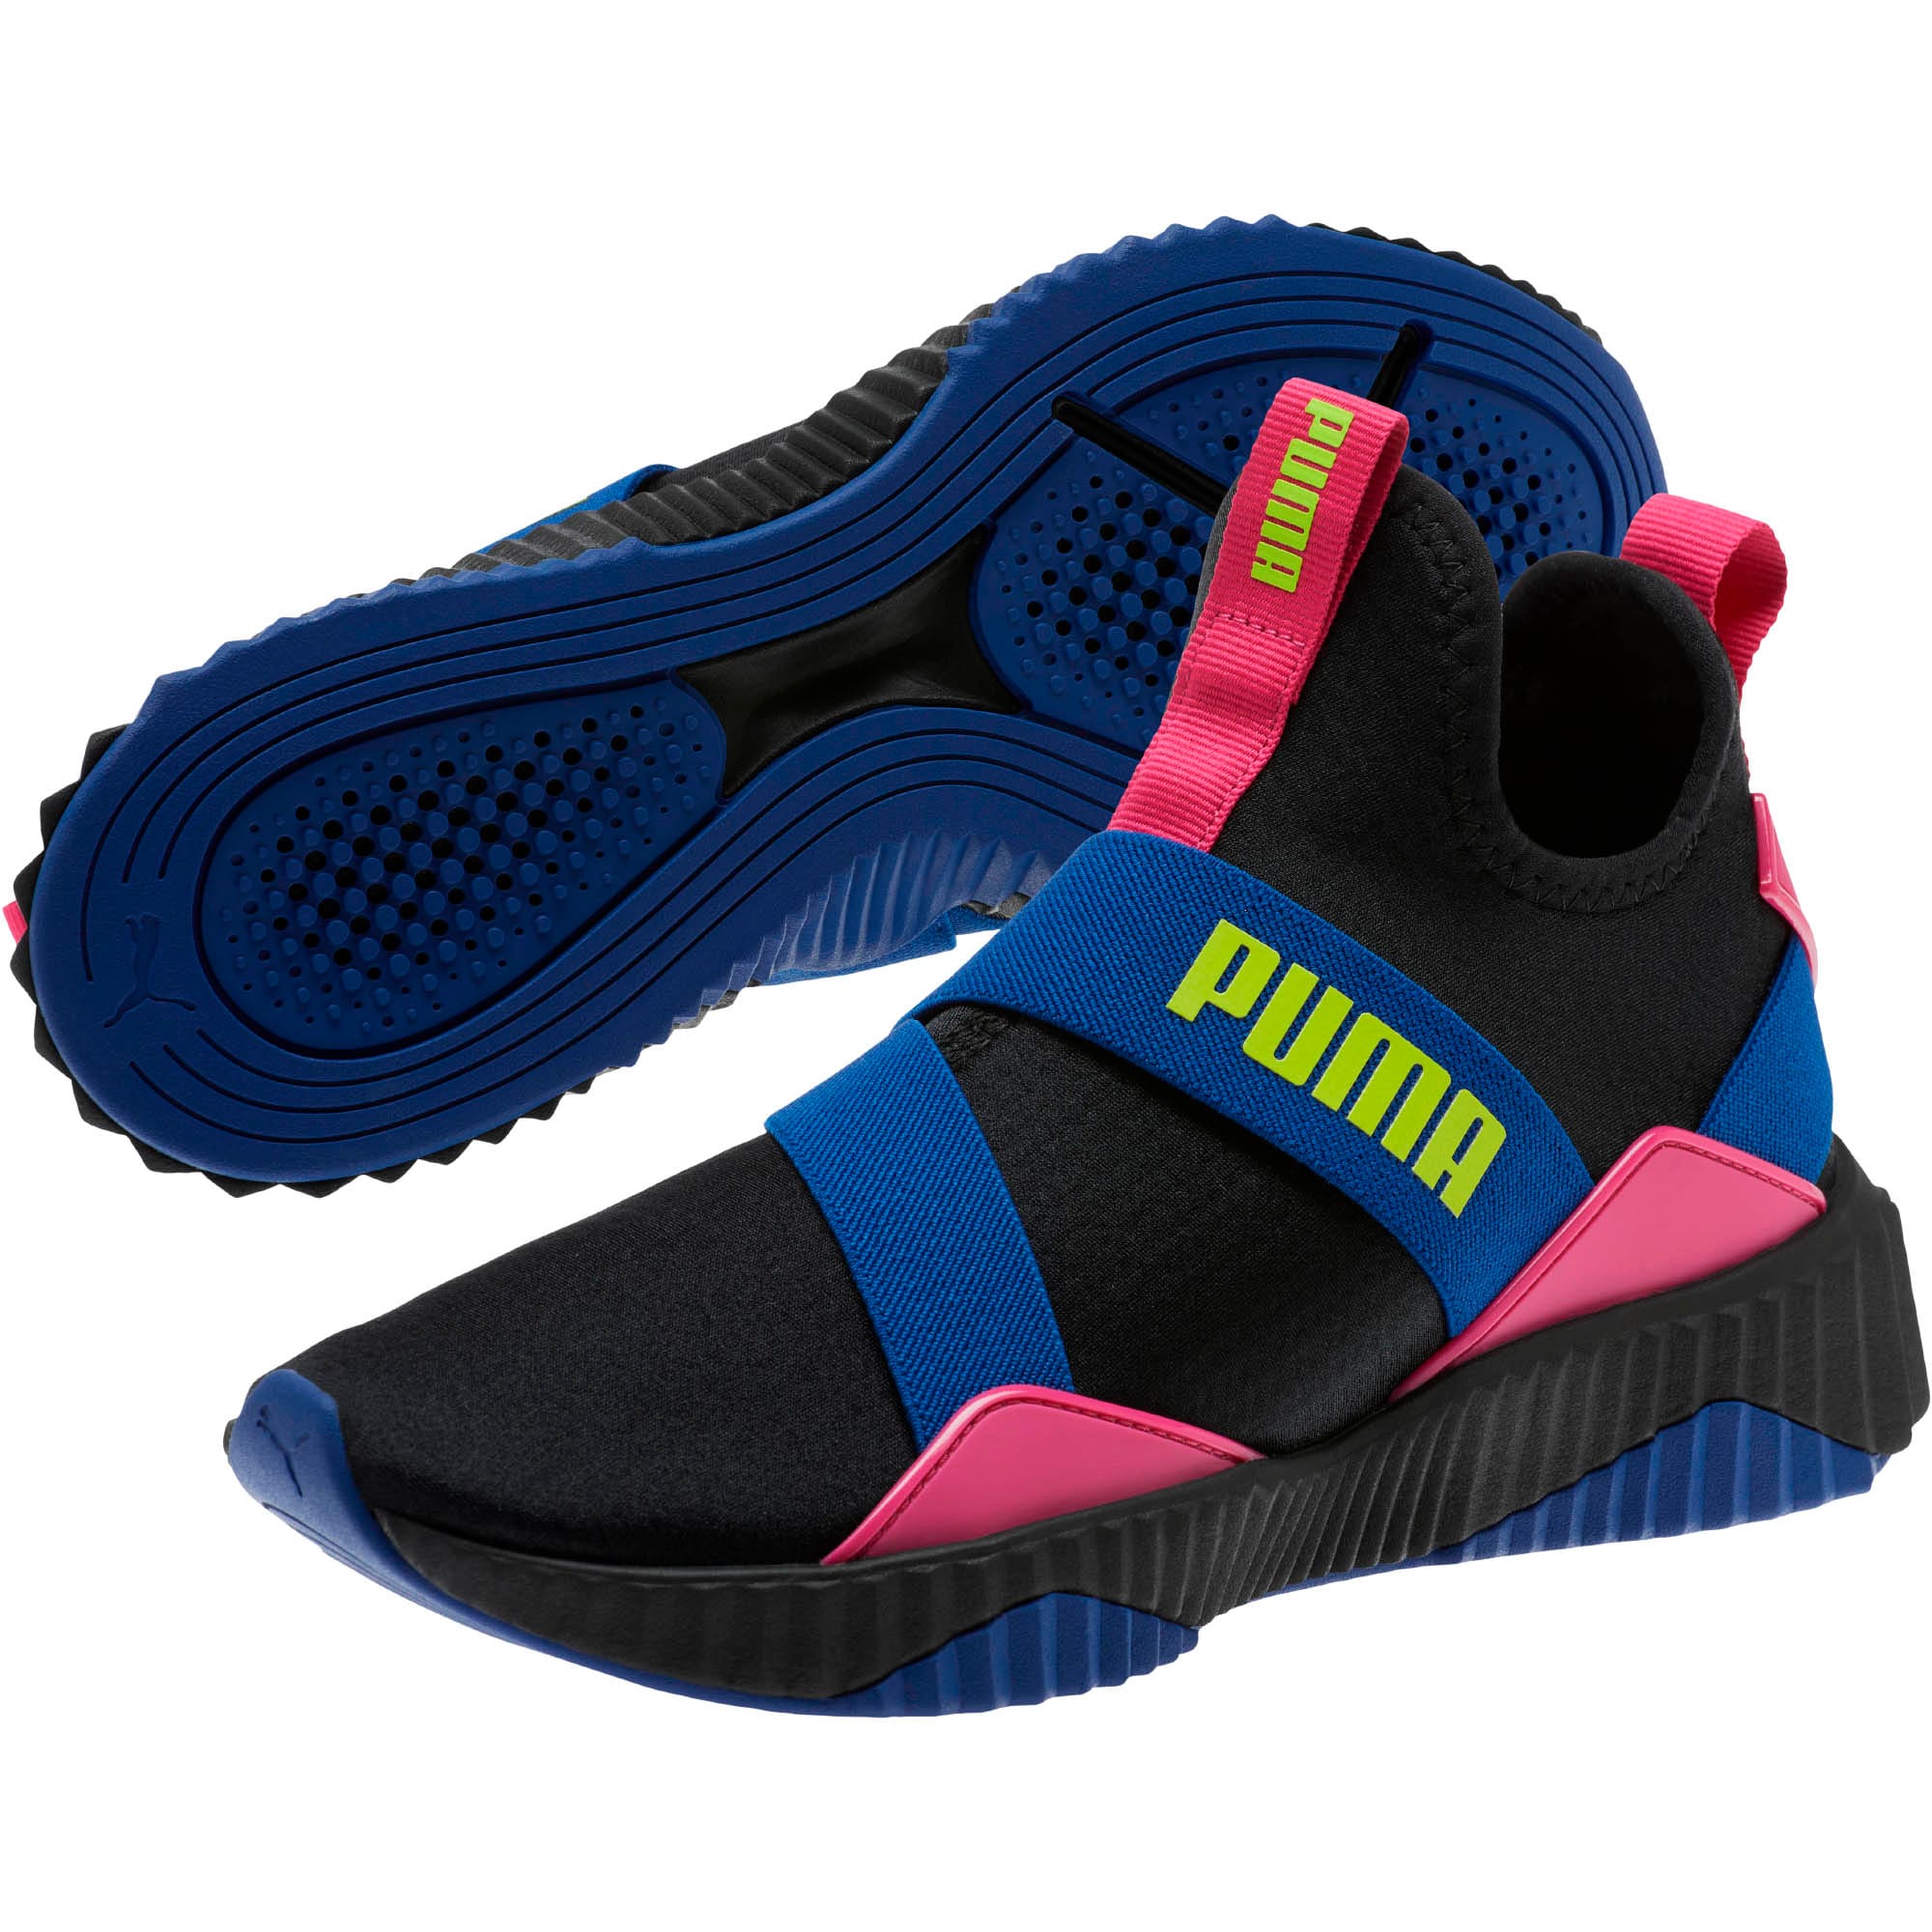 puma defy mid 90s sneakers